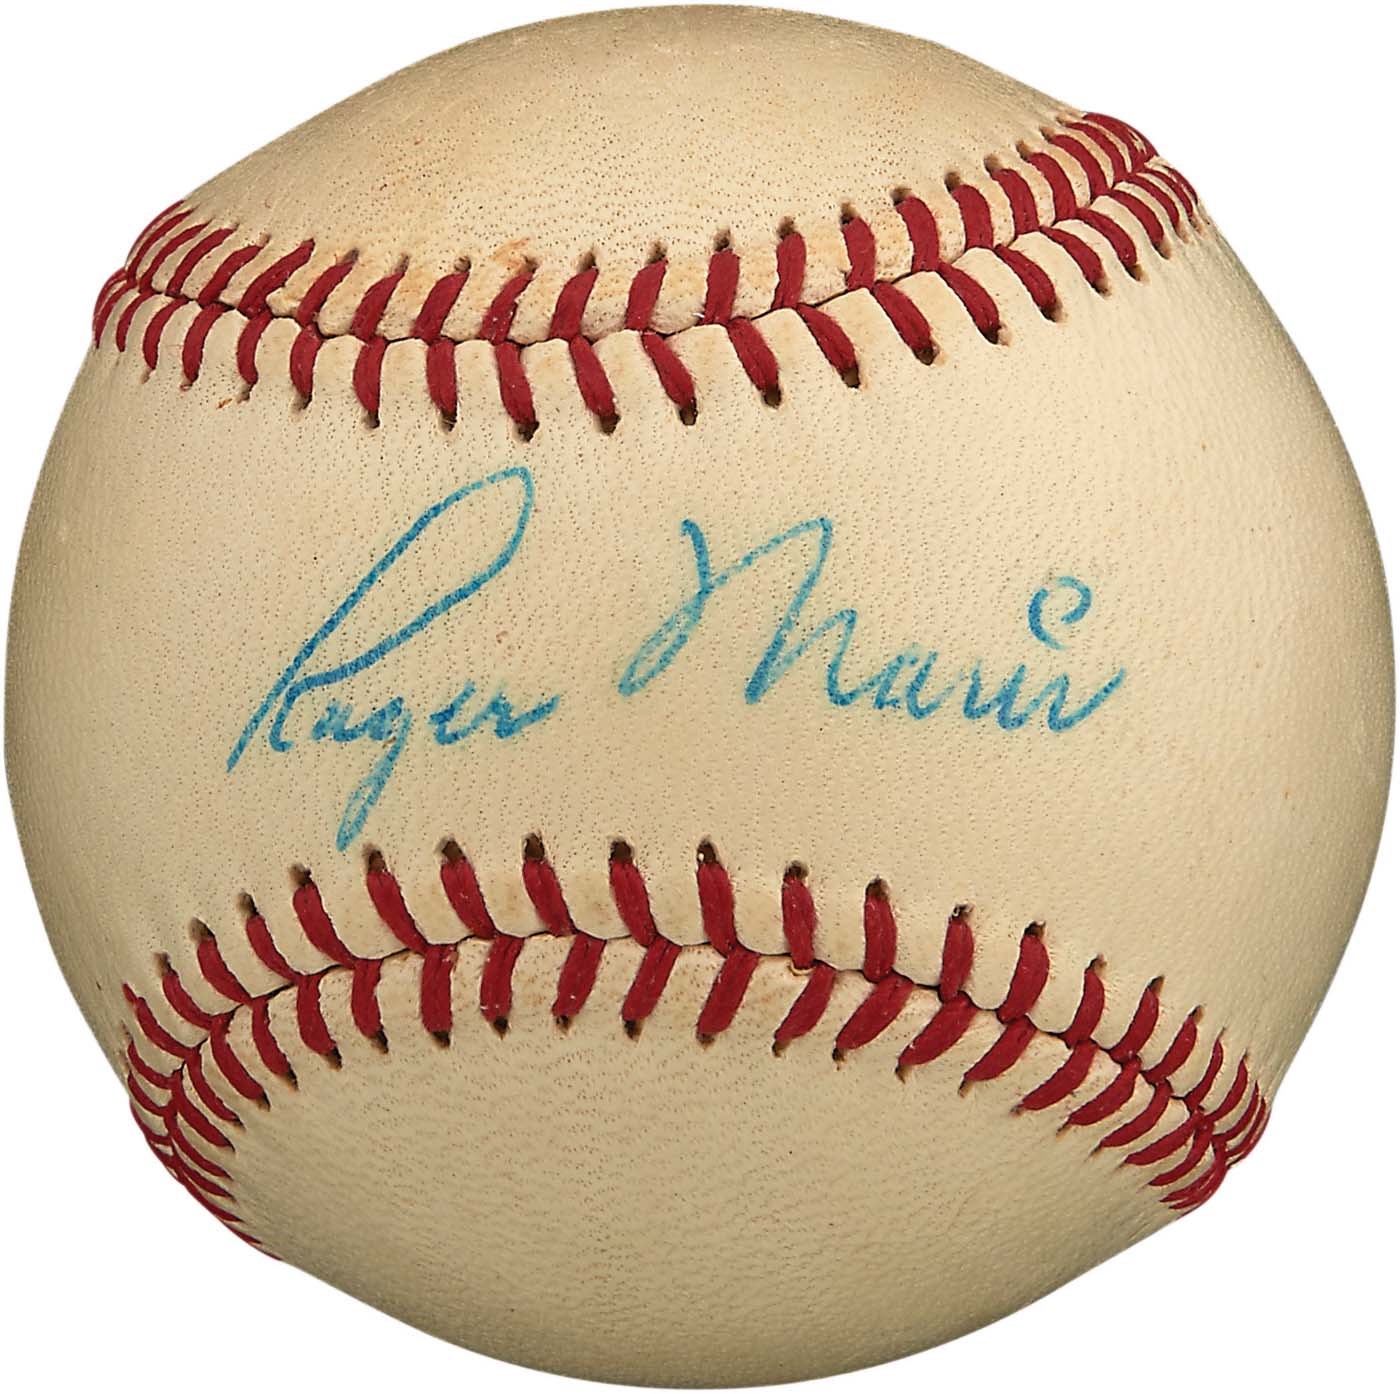 Early 1960s Roger Maris Single-Signed Baseball (PSA NM-MT 8)